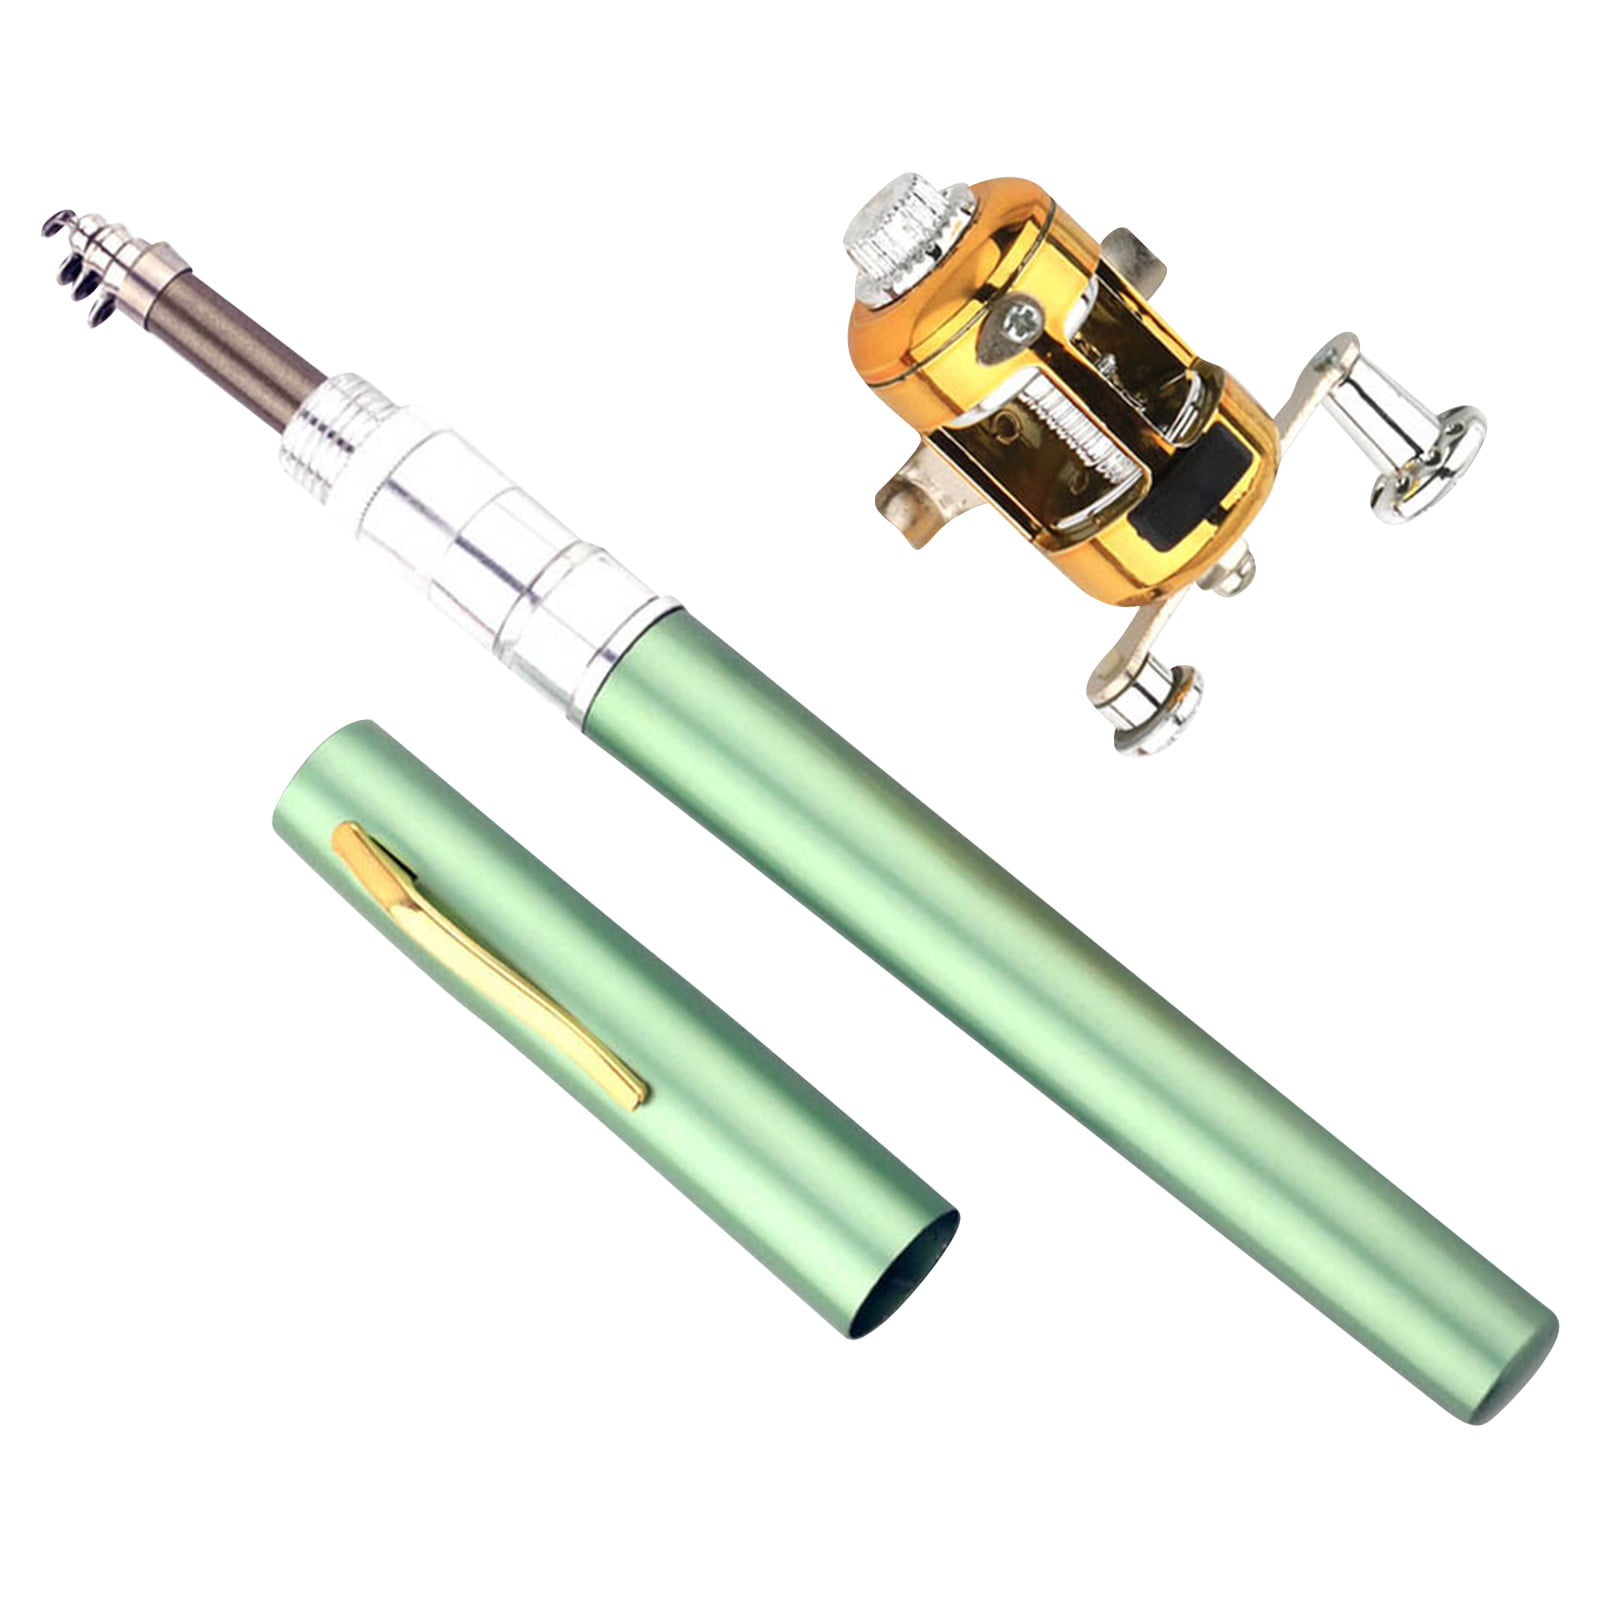 Outdoor stream pro fishing rod reel combos portable pocket telescopic mini  pole pen shape – Artofit